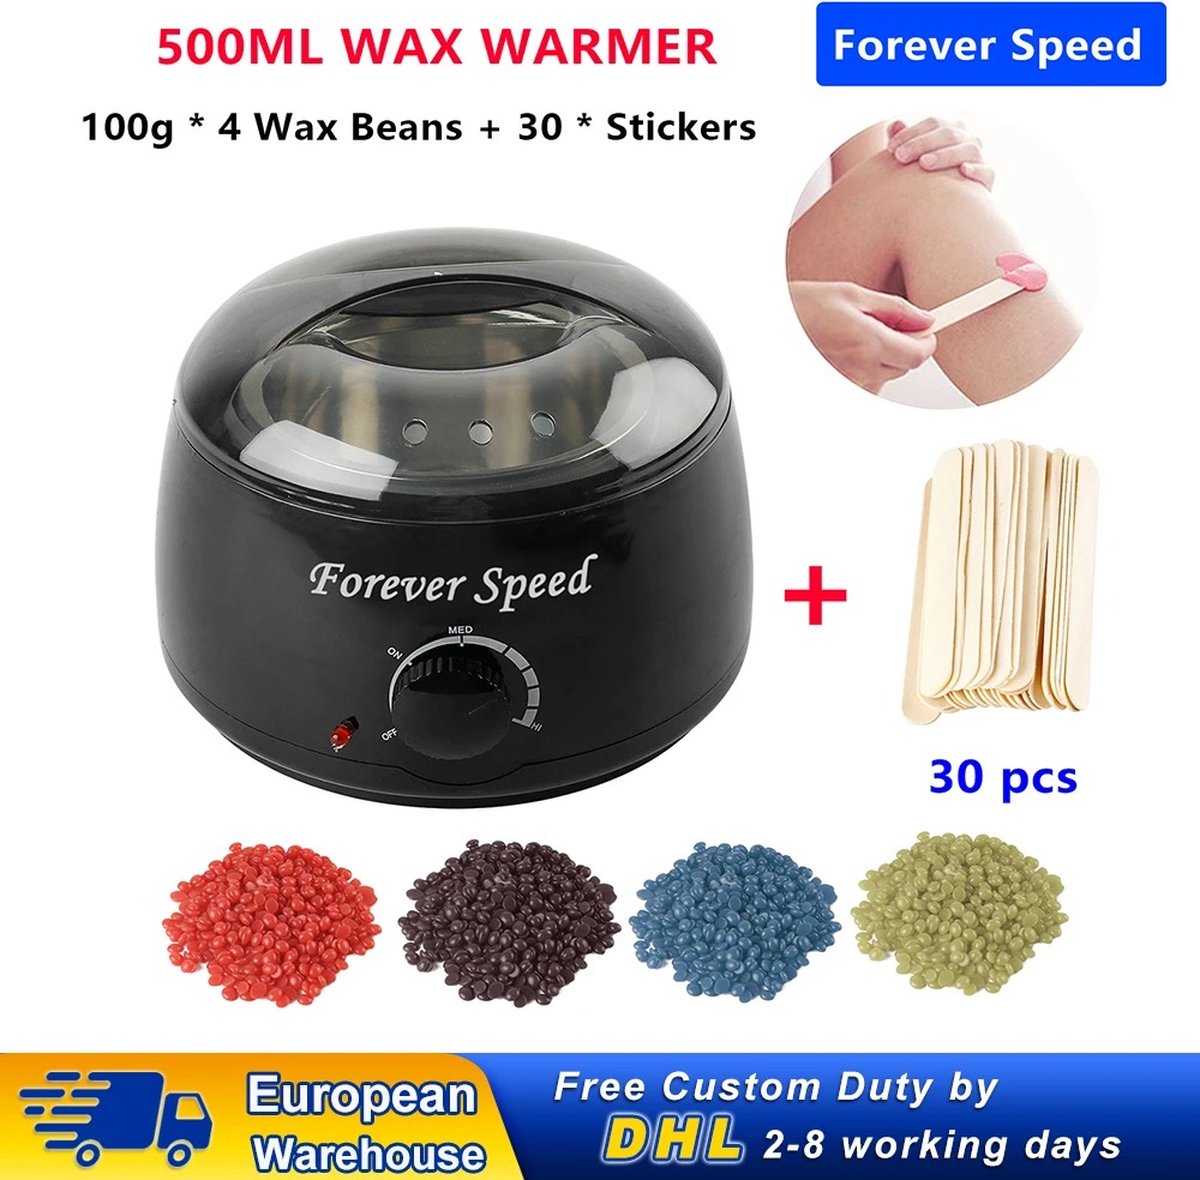 Svdm Wax Apparaat Ontharingsapparaat Ontharing Wax Verwarmer Inclusief Wax Beans Inclusief Spatels 500ml Zwart